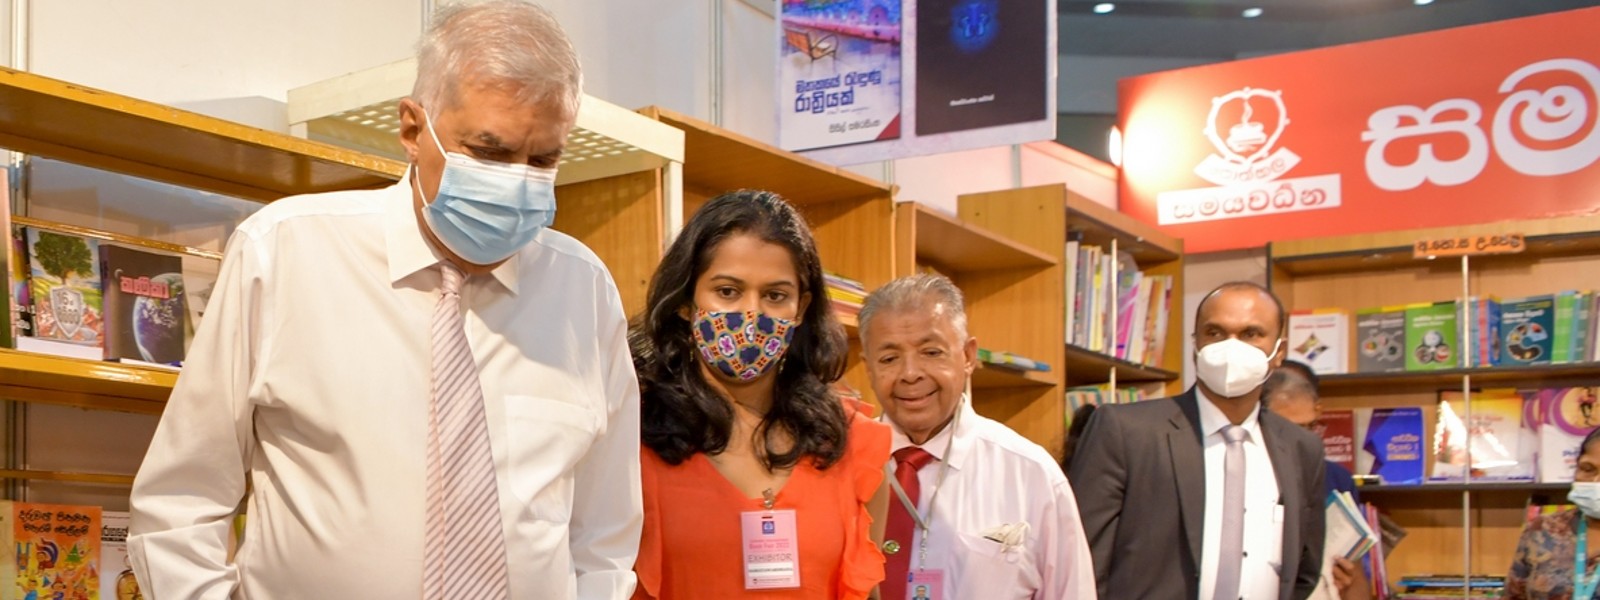 President at Colombo International Book Fair